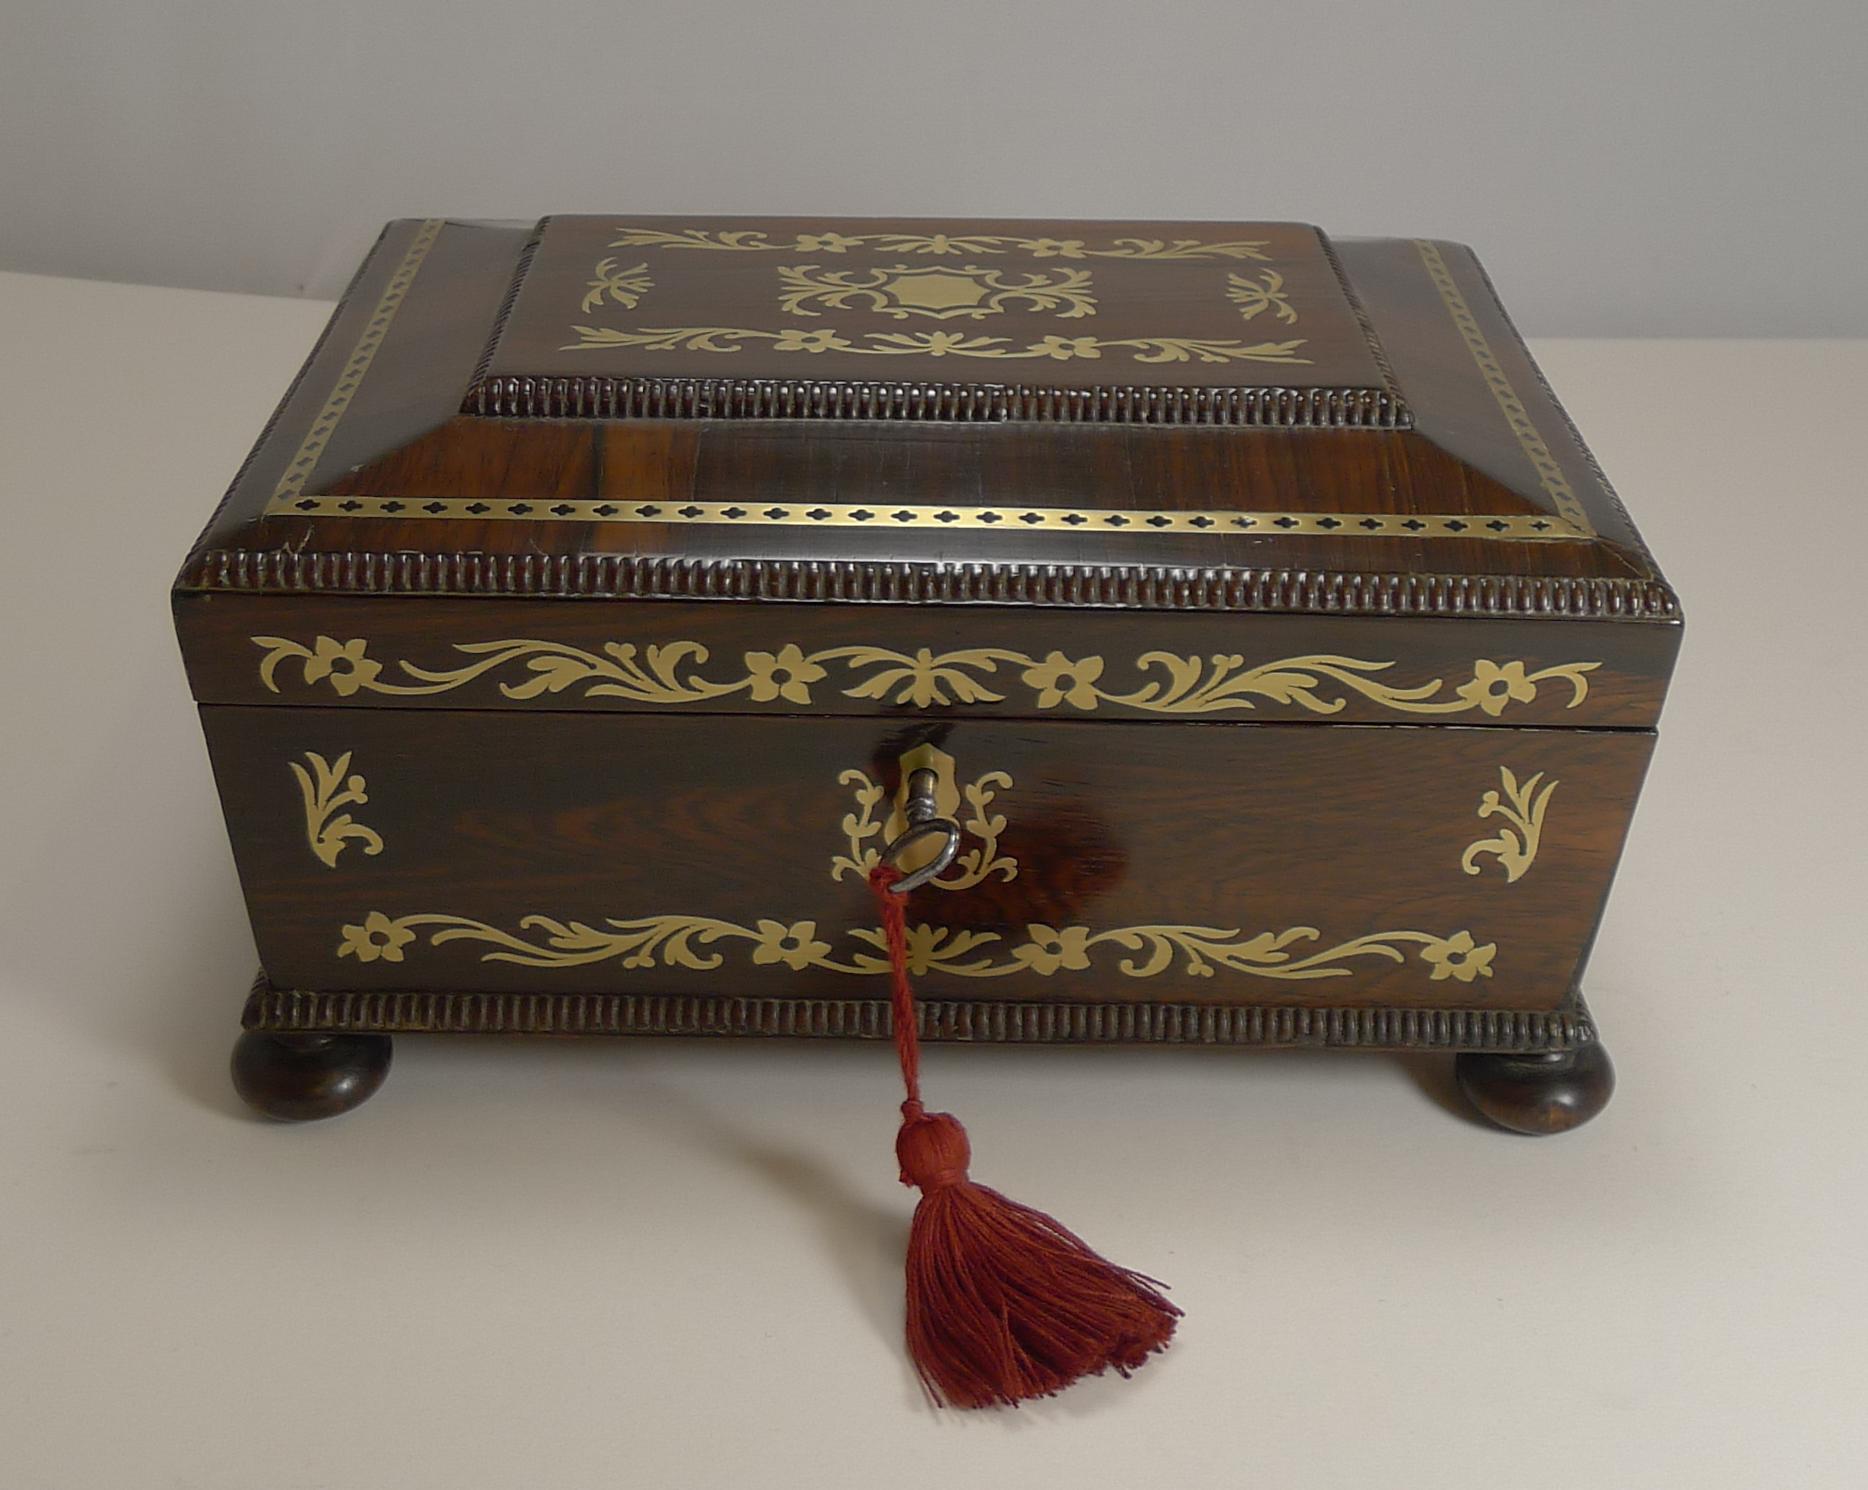 Regency Antique English Cut Brass Inlaid Jewelry / Desk Box, circa 1820